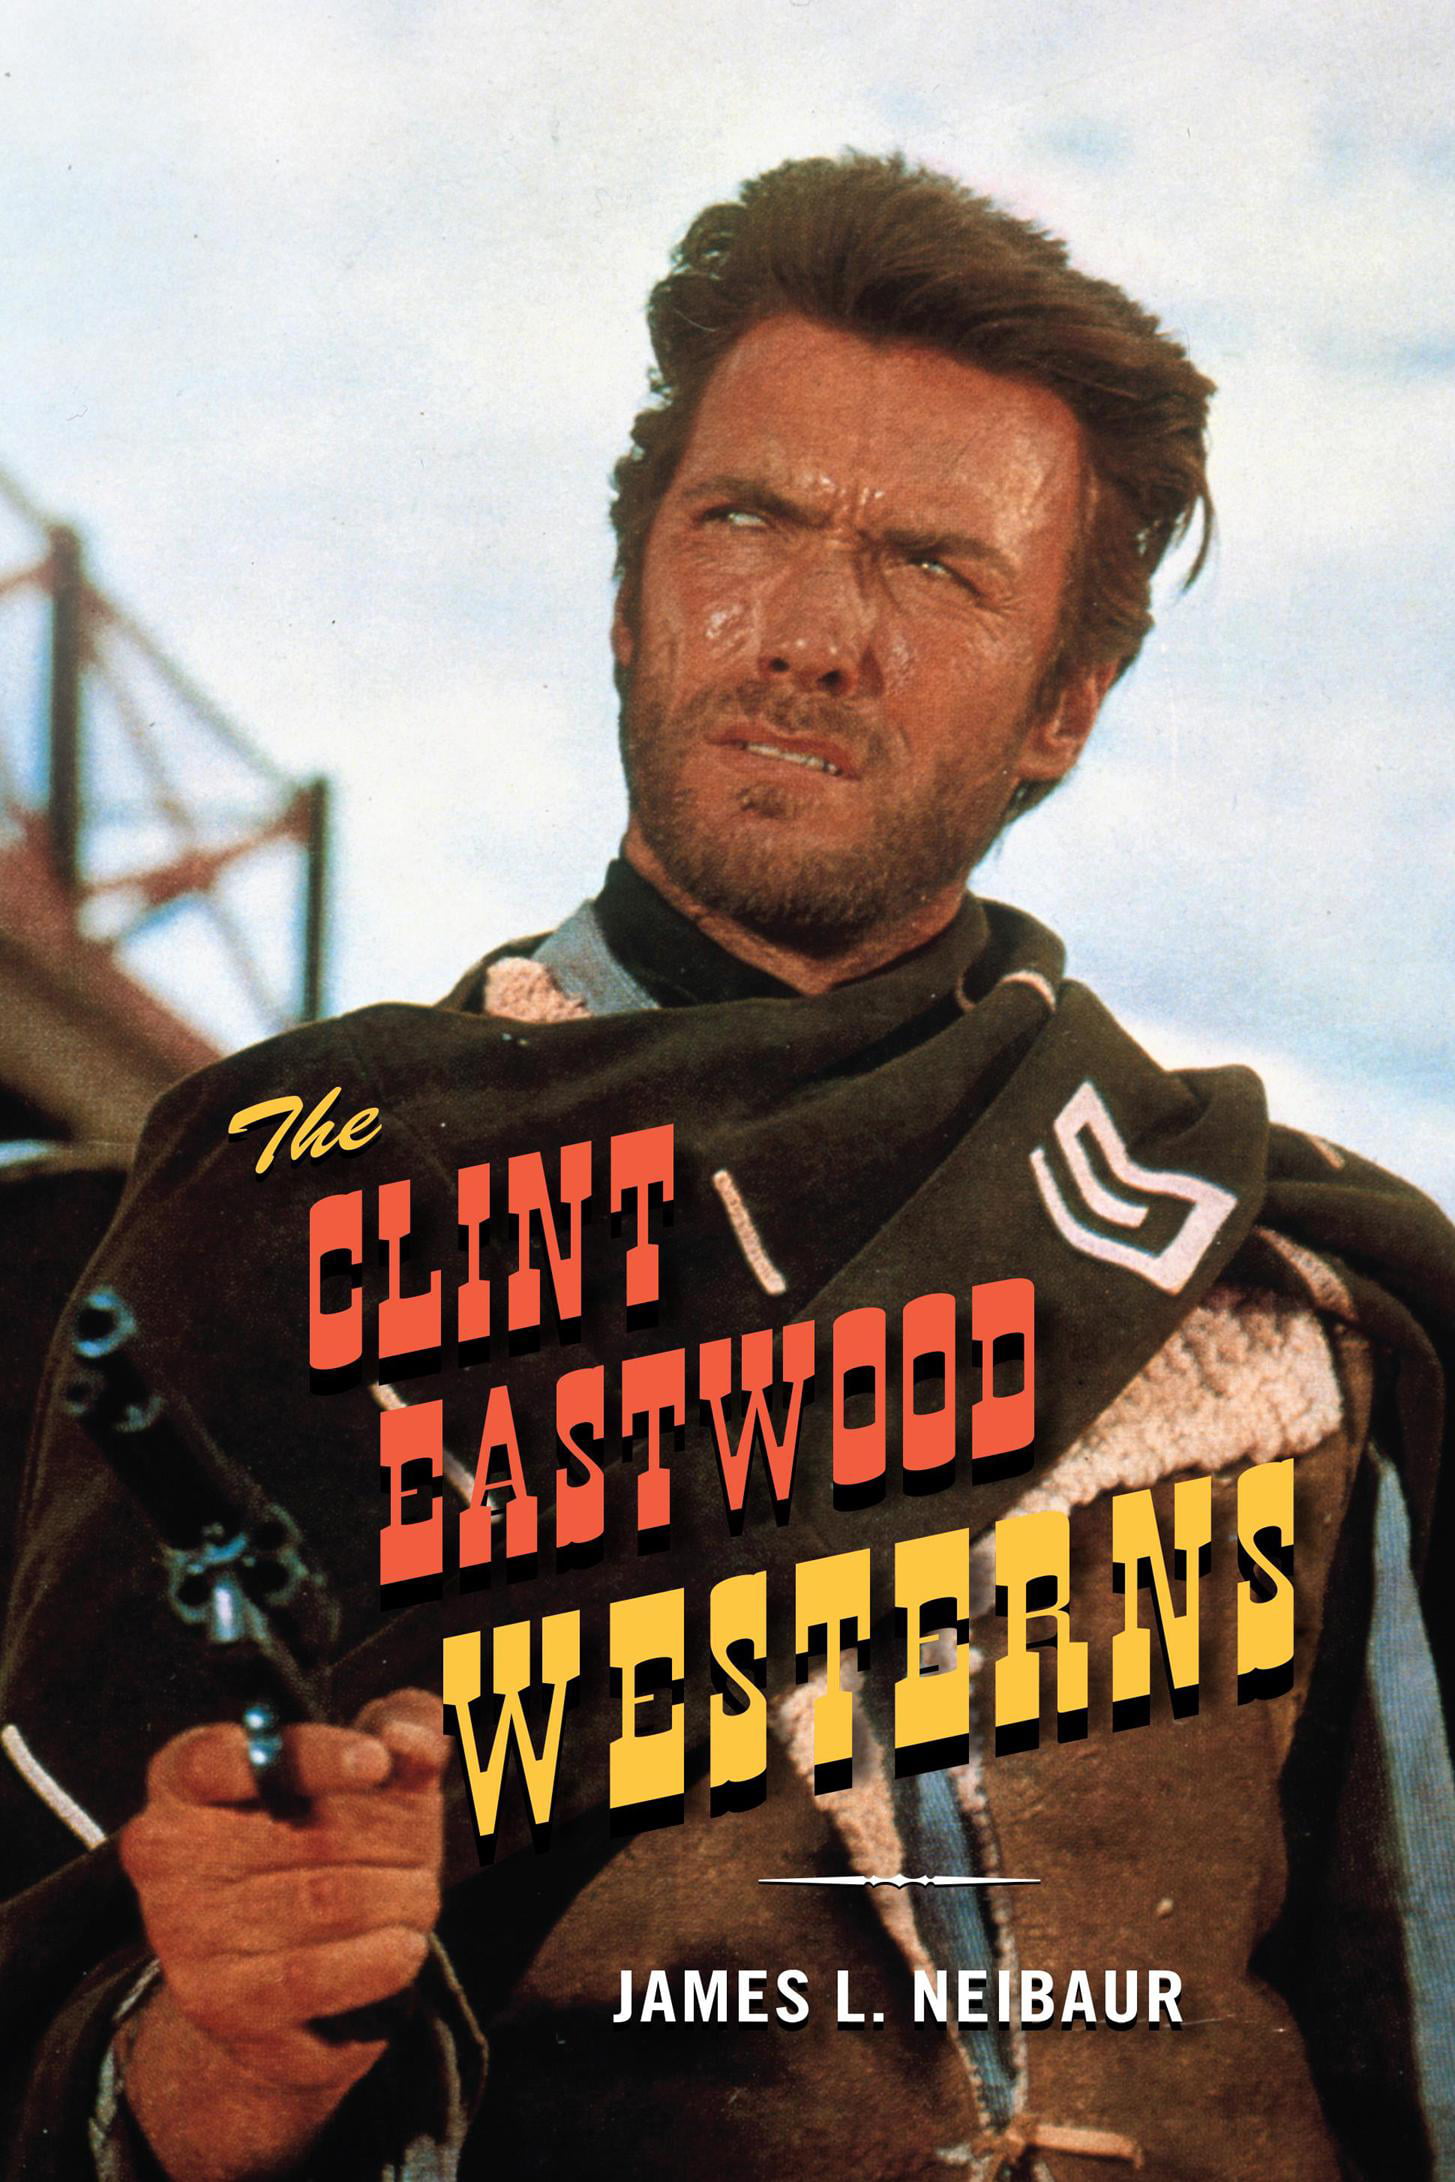 best clint eastwood biography book